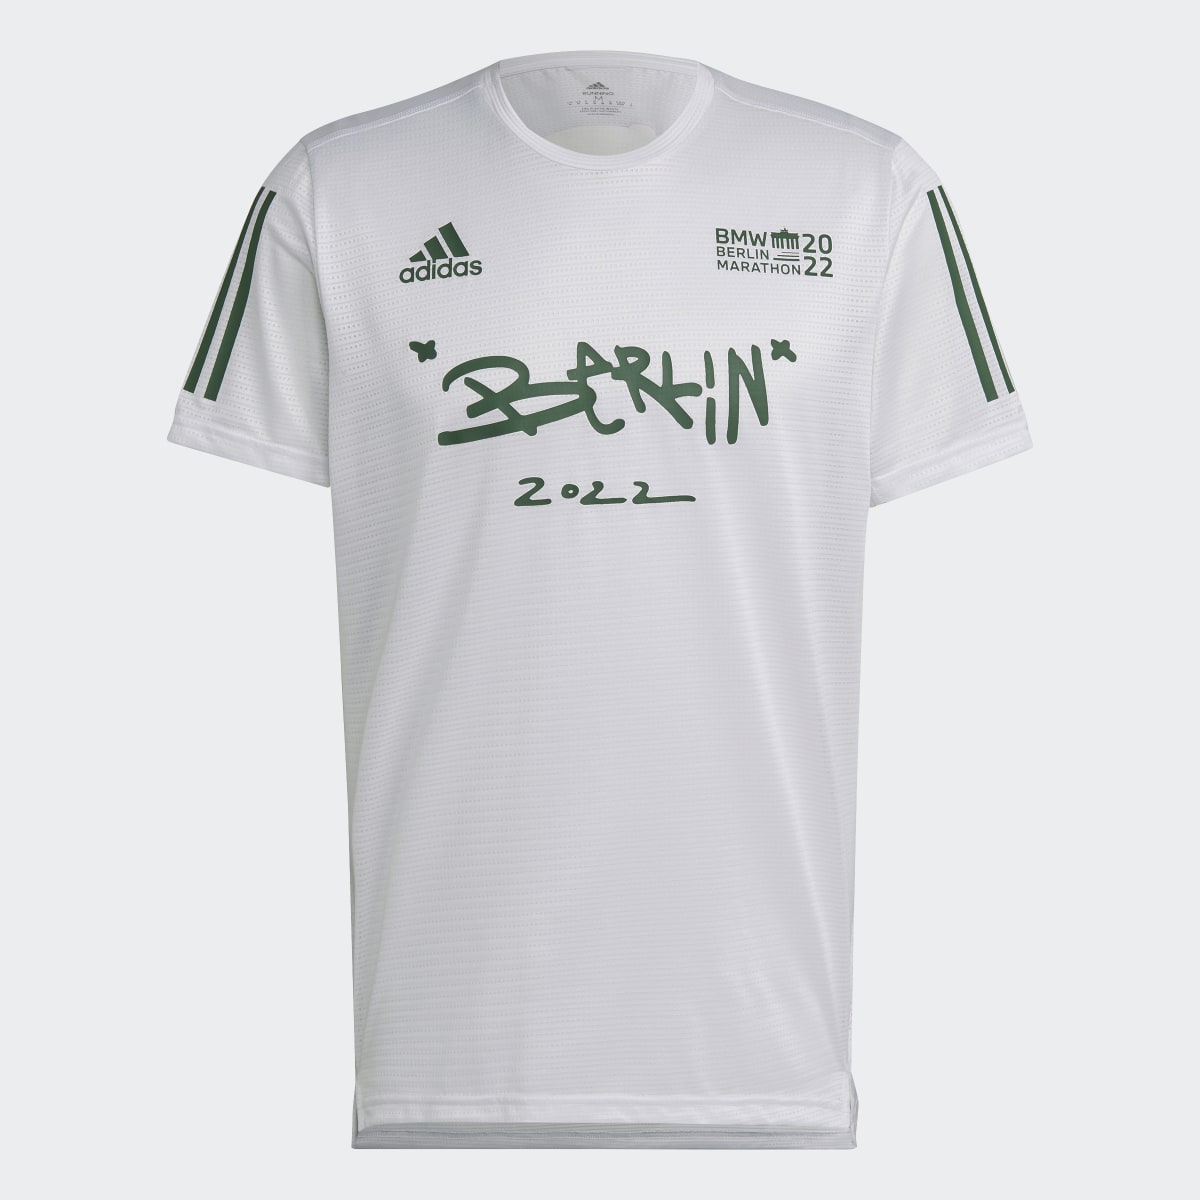 Adidas Camiseta Berlin Marathon 2022. 5